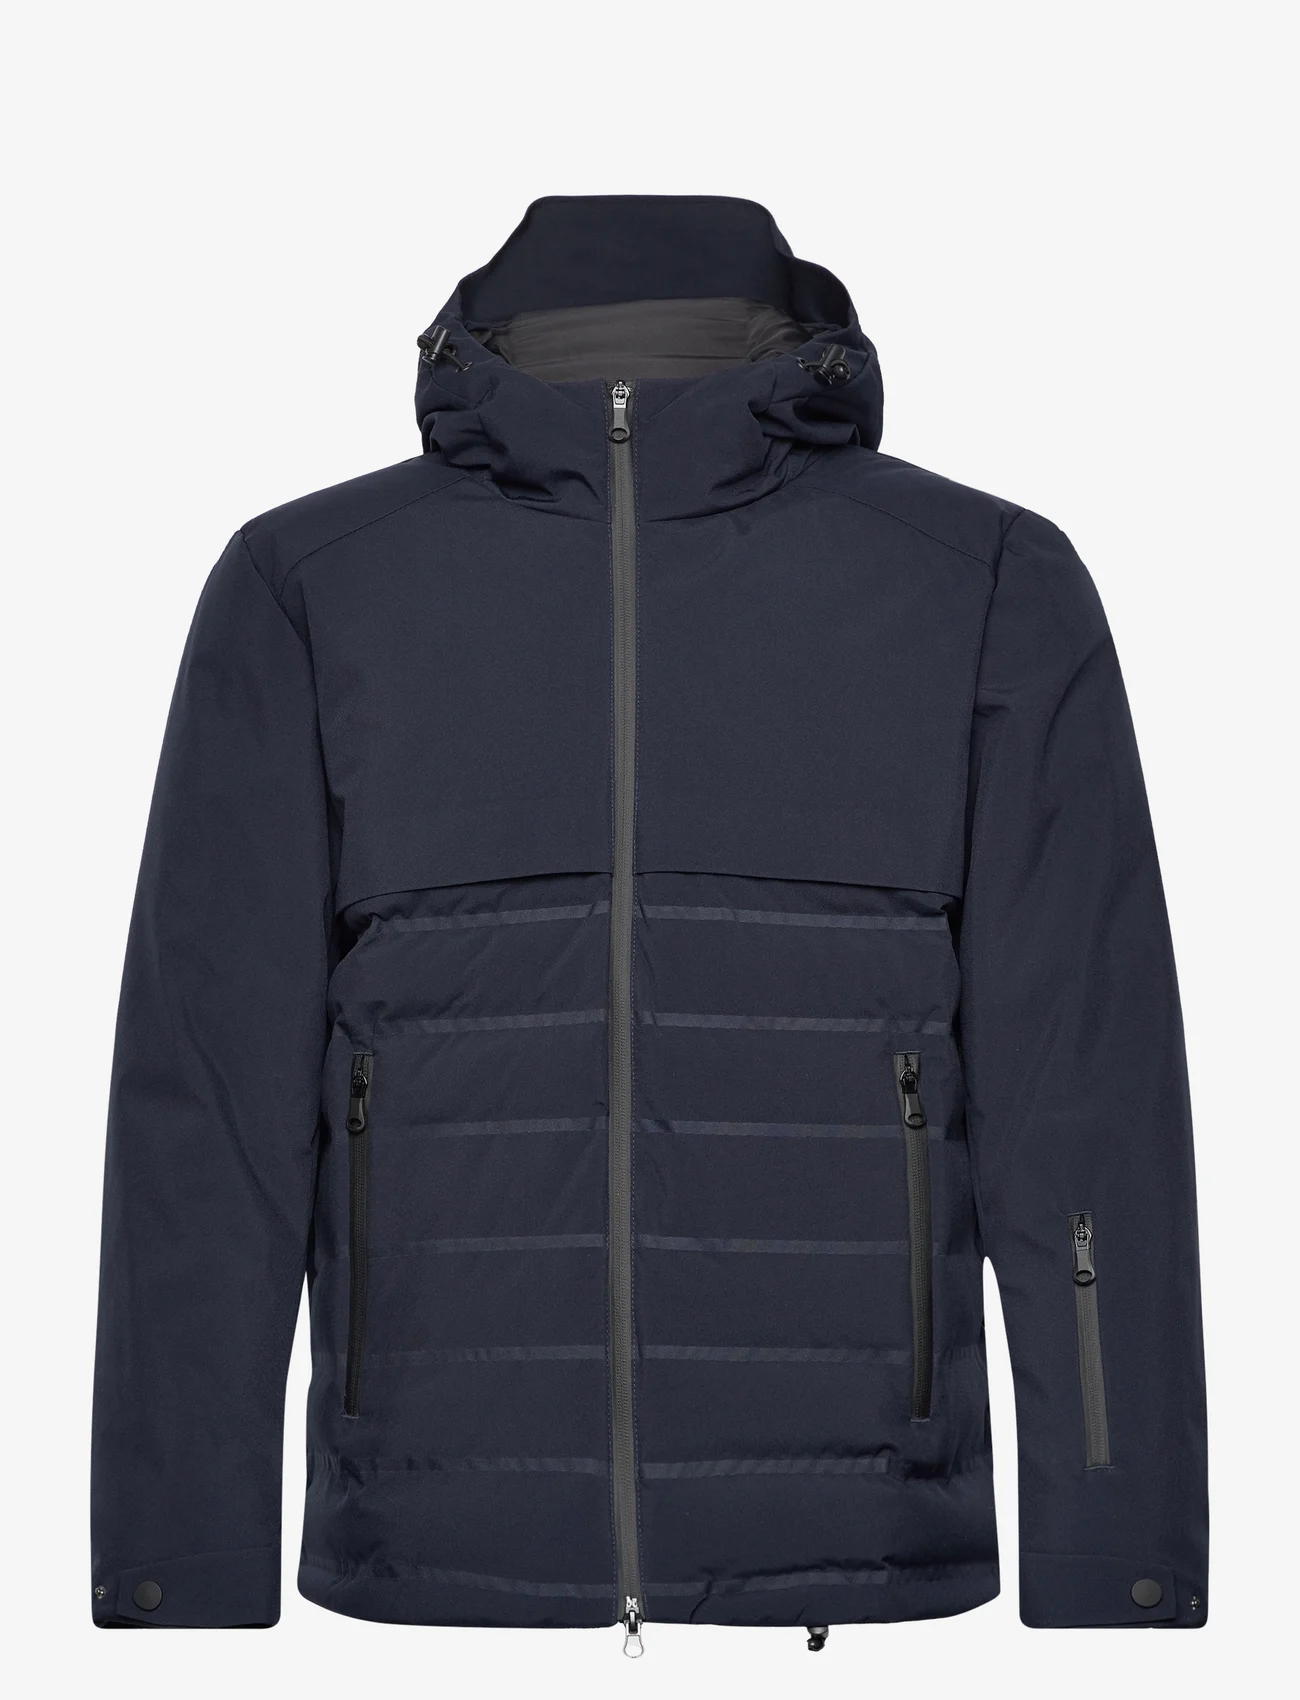 Matinique - MAgrangery - winter jackets - dark navy - 0